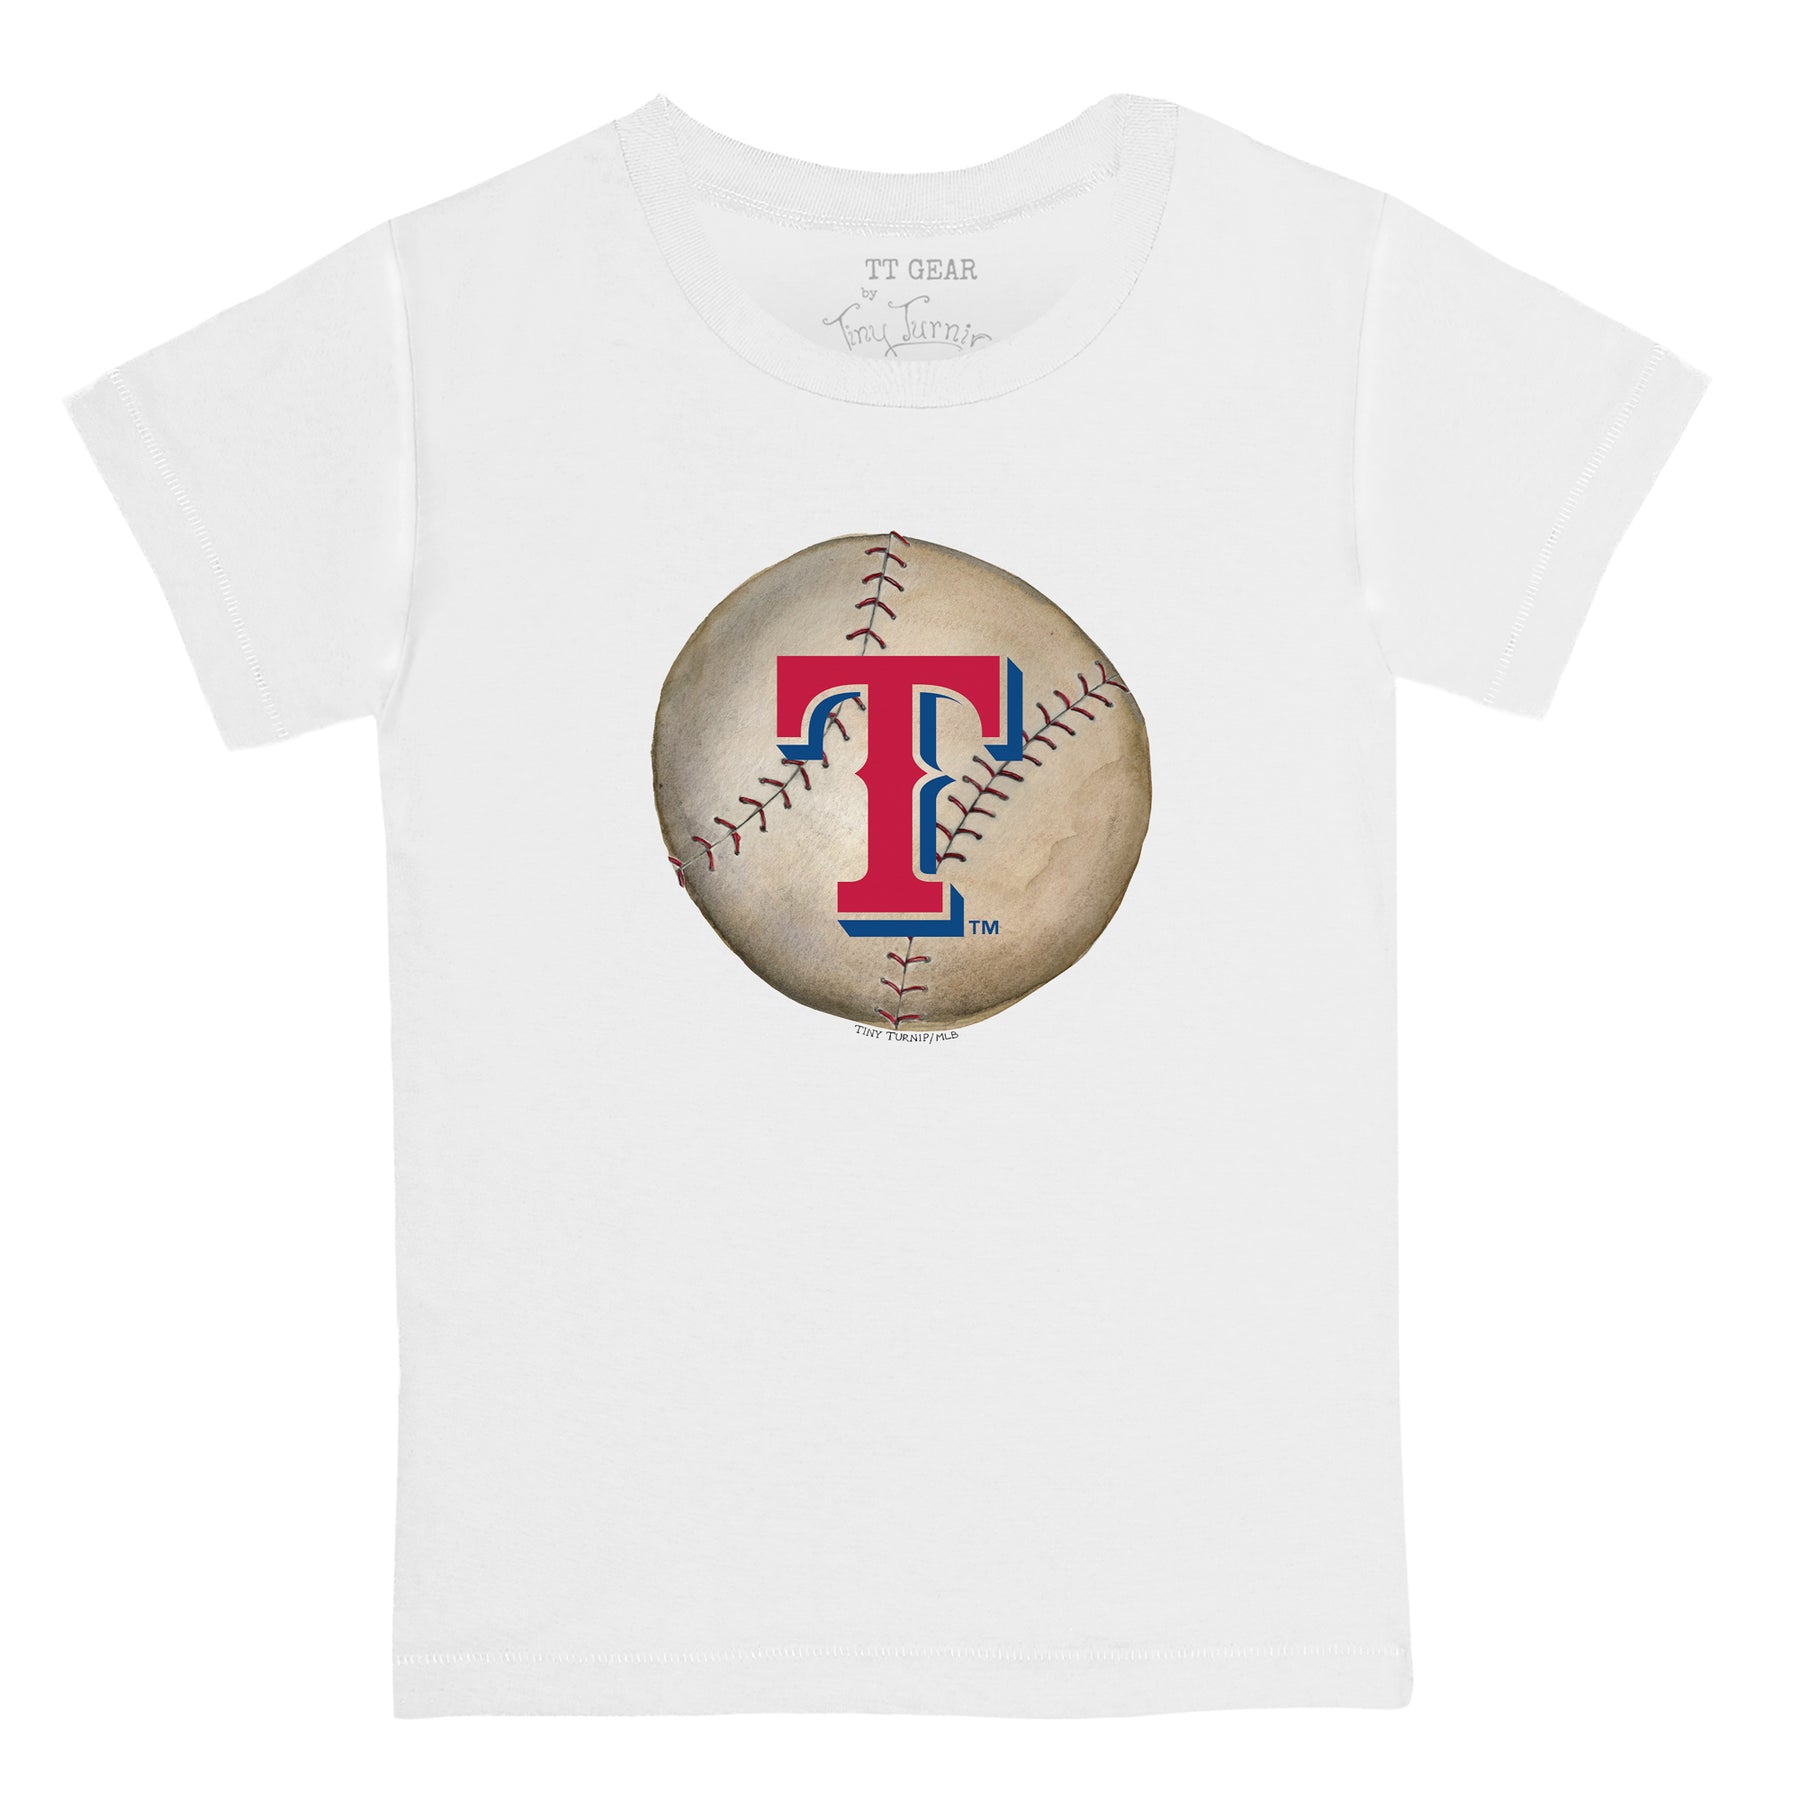 Lids Texas Rangers Tiny Turnip Youth Baseball Bow T-Shirt - White